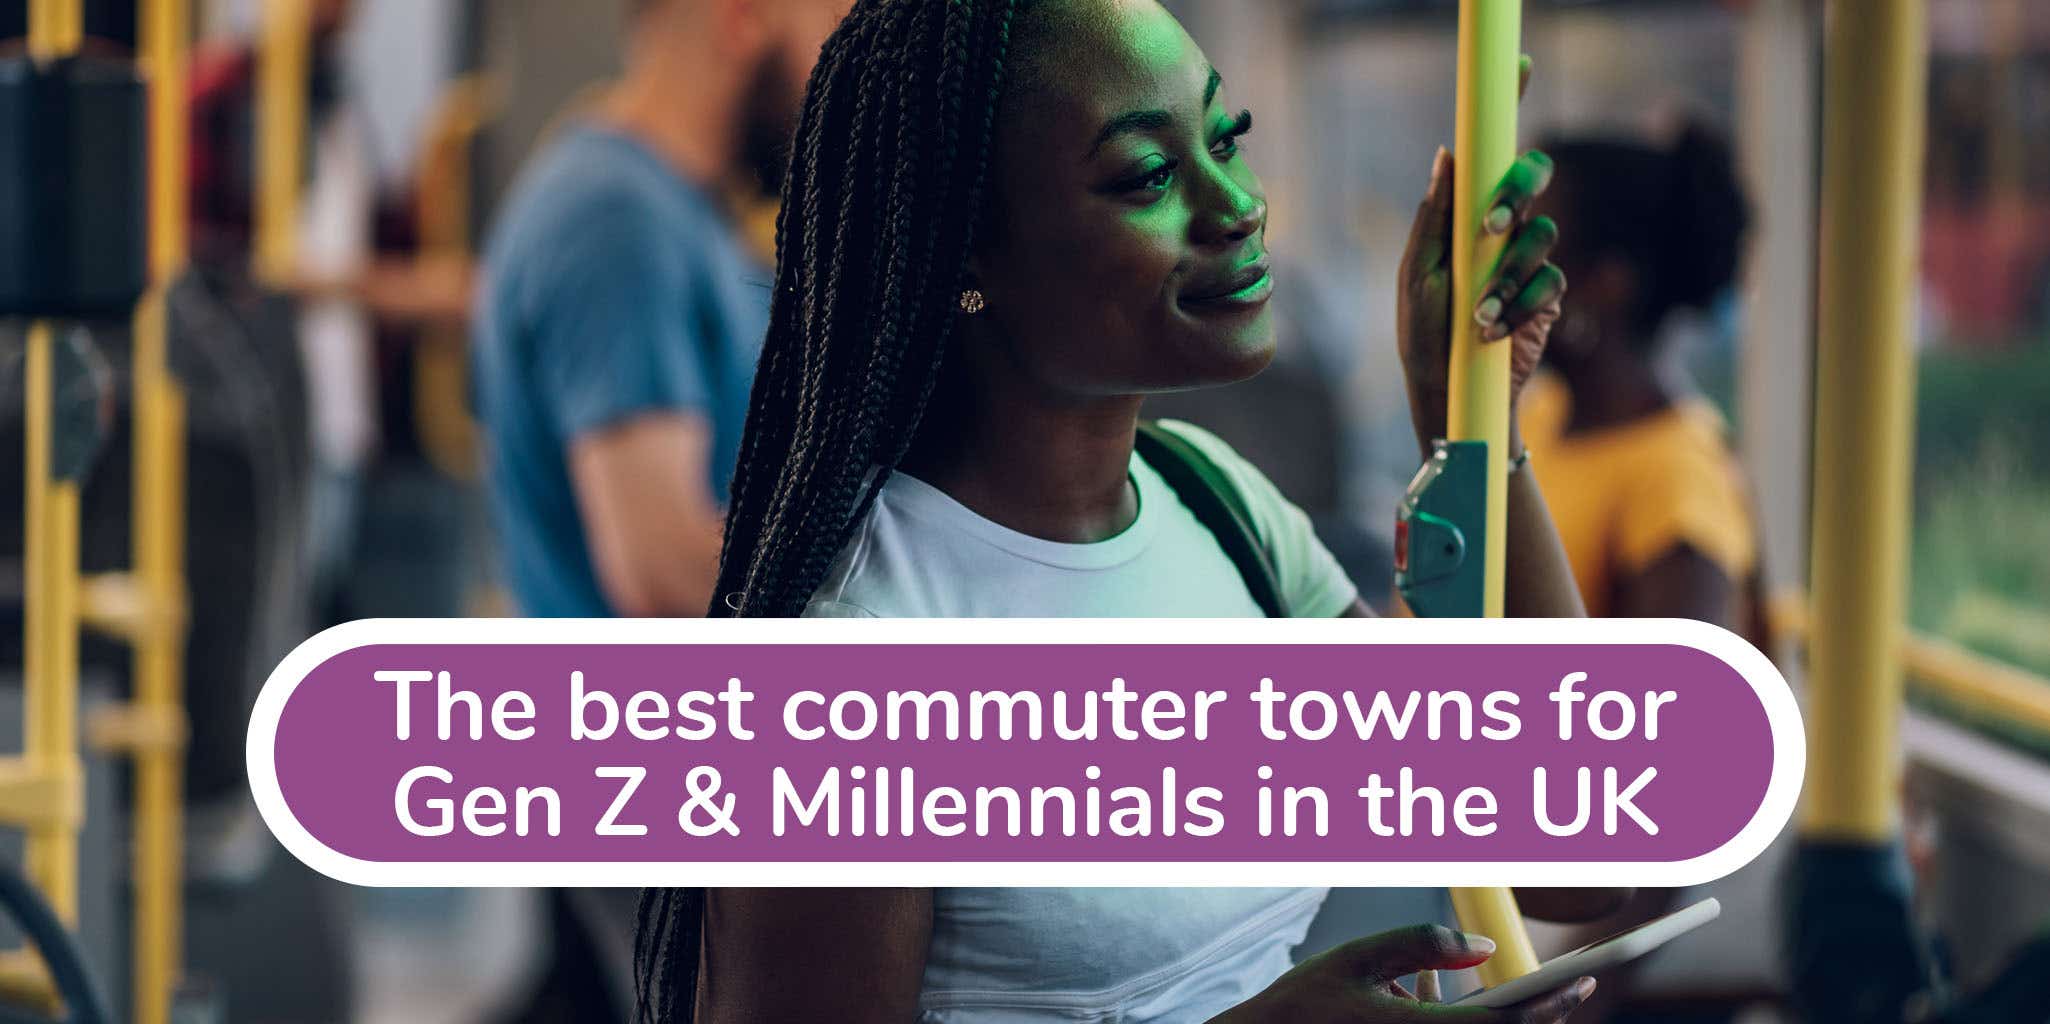 The best commuter towns for Gen Z & Millennials in the UK header image